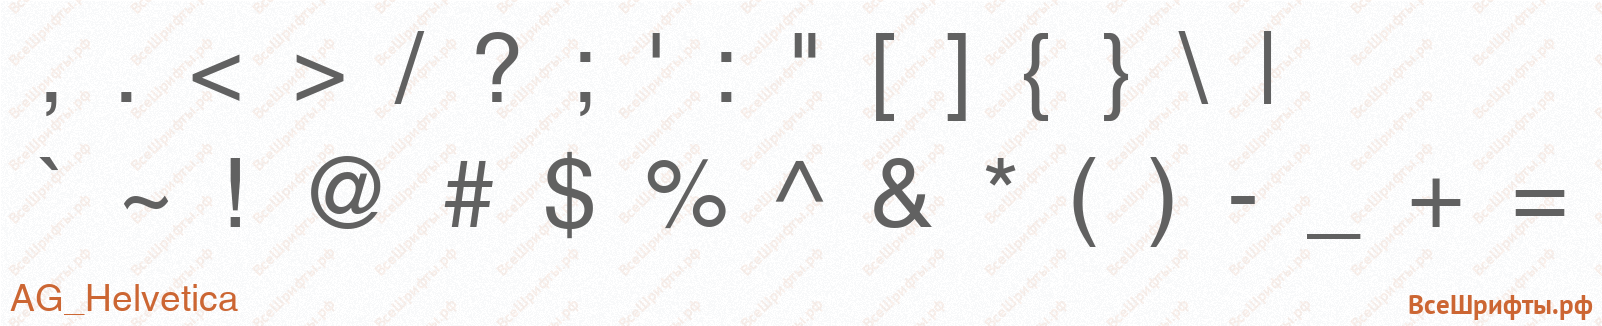 Шрифт AG_Helvetica со знаками препинания и пунктуации